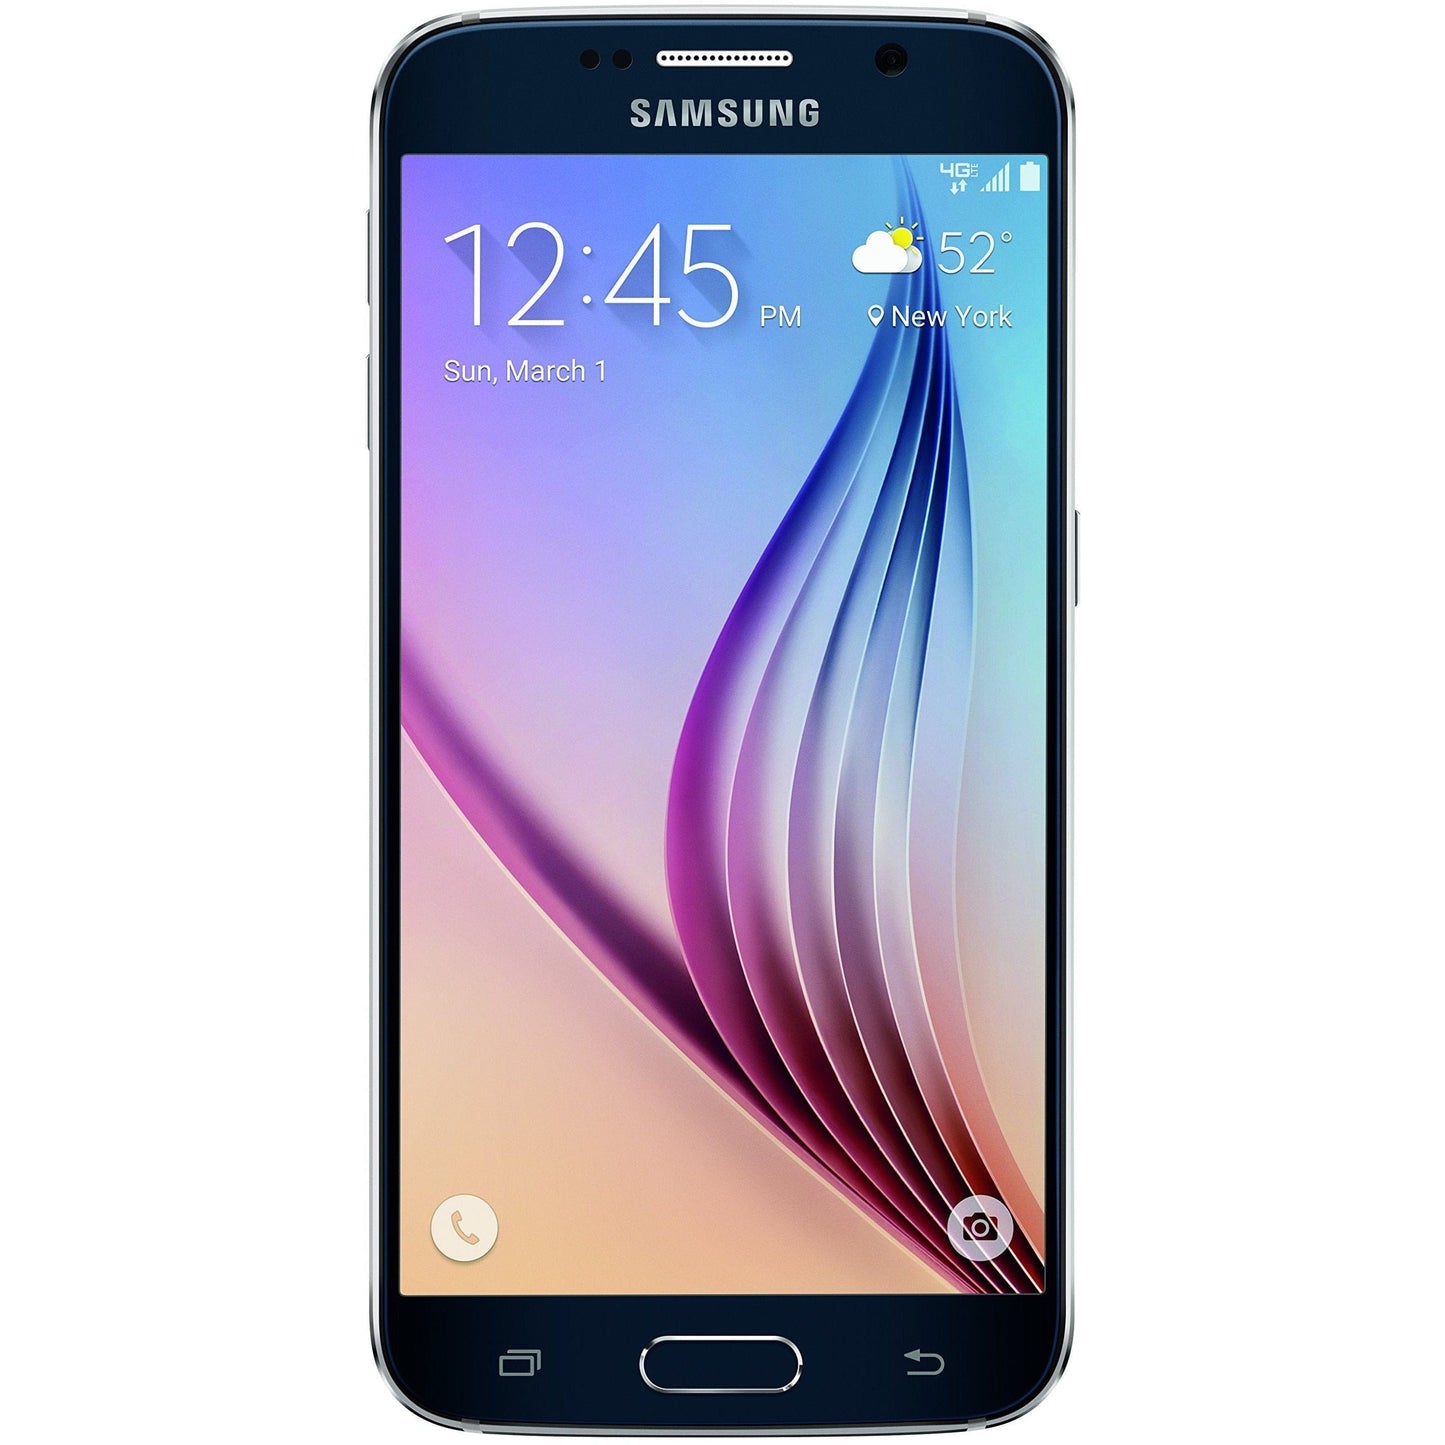 Samsung Galaxy S6 - 32 GB - Black Sapphire - T-Mobile